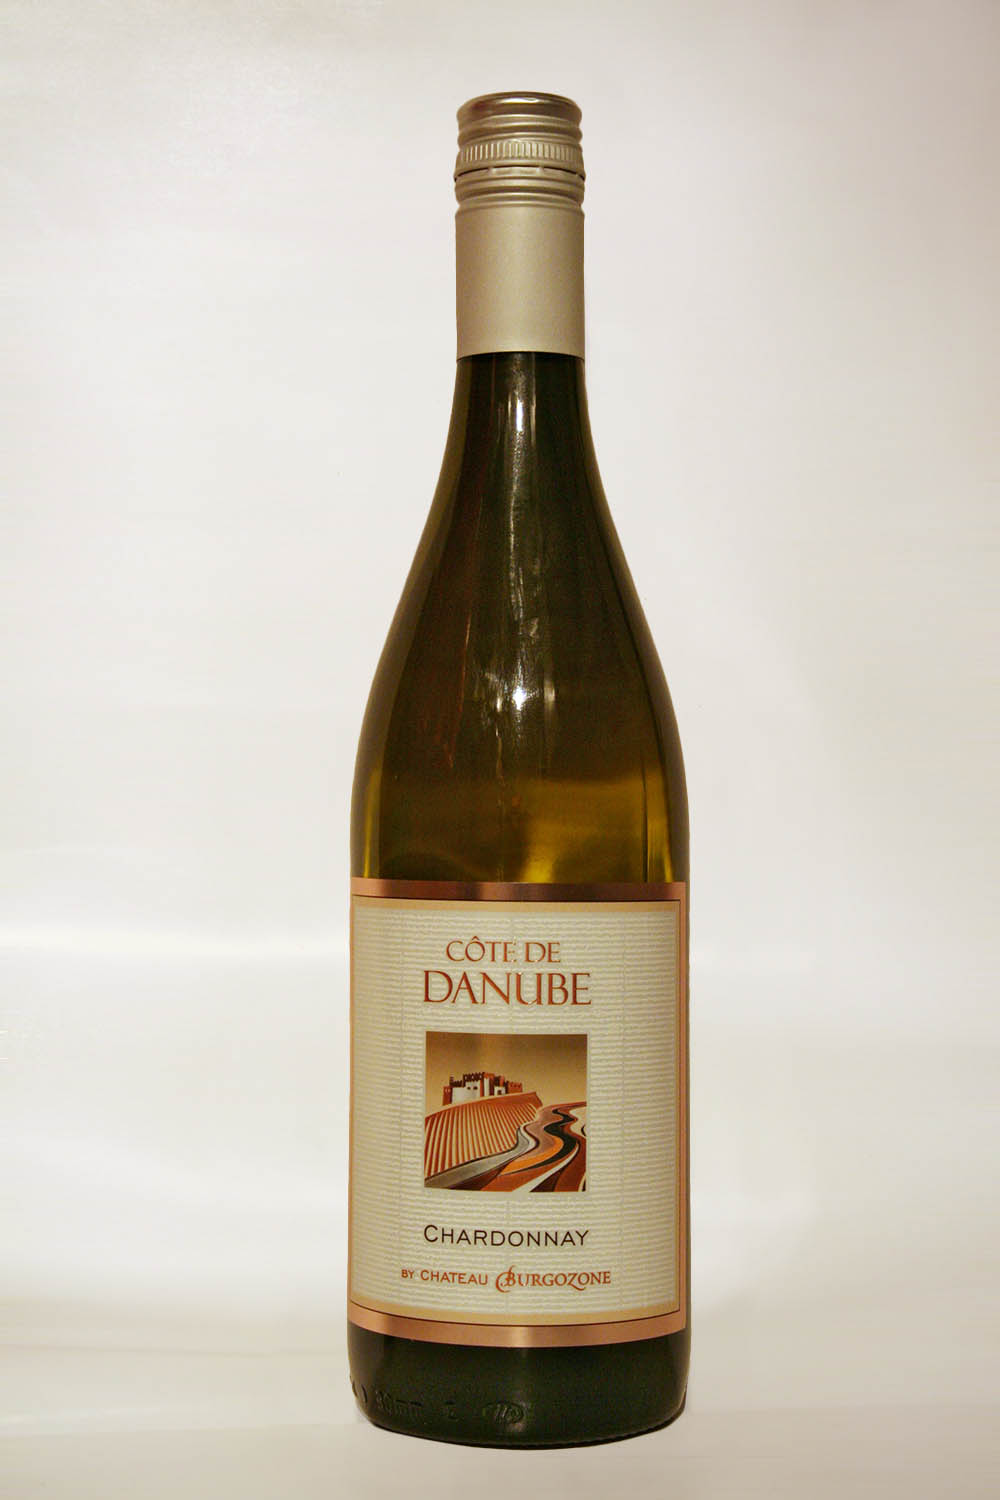 Cote de Danube Chardonnay 2013